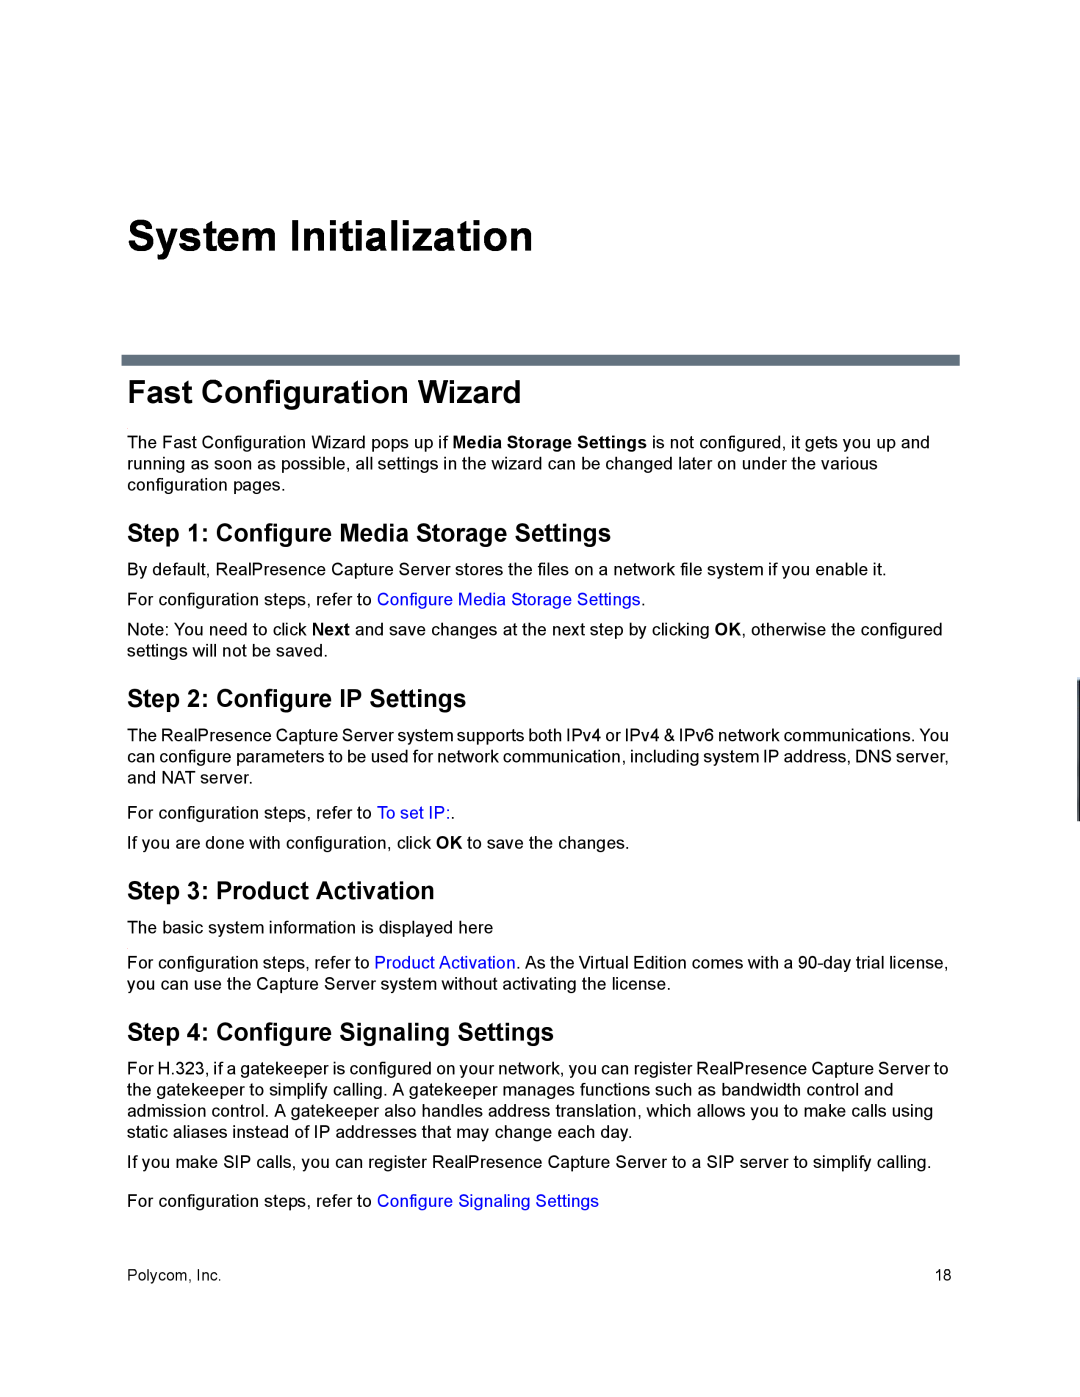 Polycom 40/0 System Initialization, Fast Configuration Wizard, Configure Media Storage Settings, Configure IP Settings 